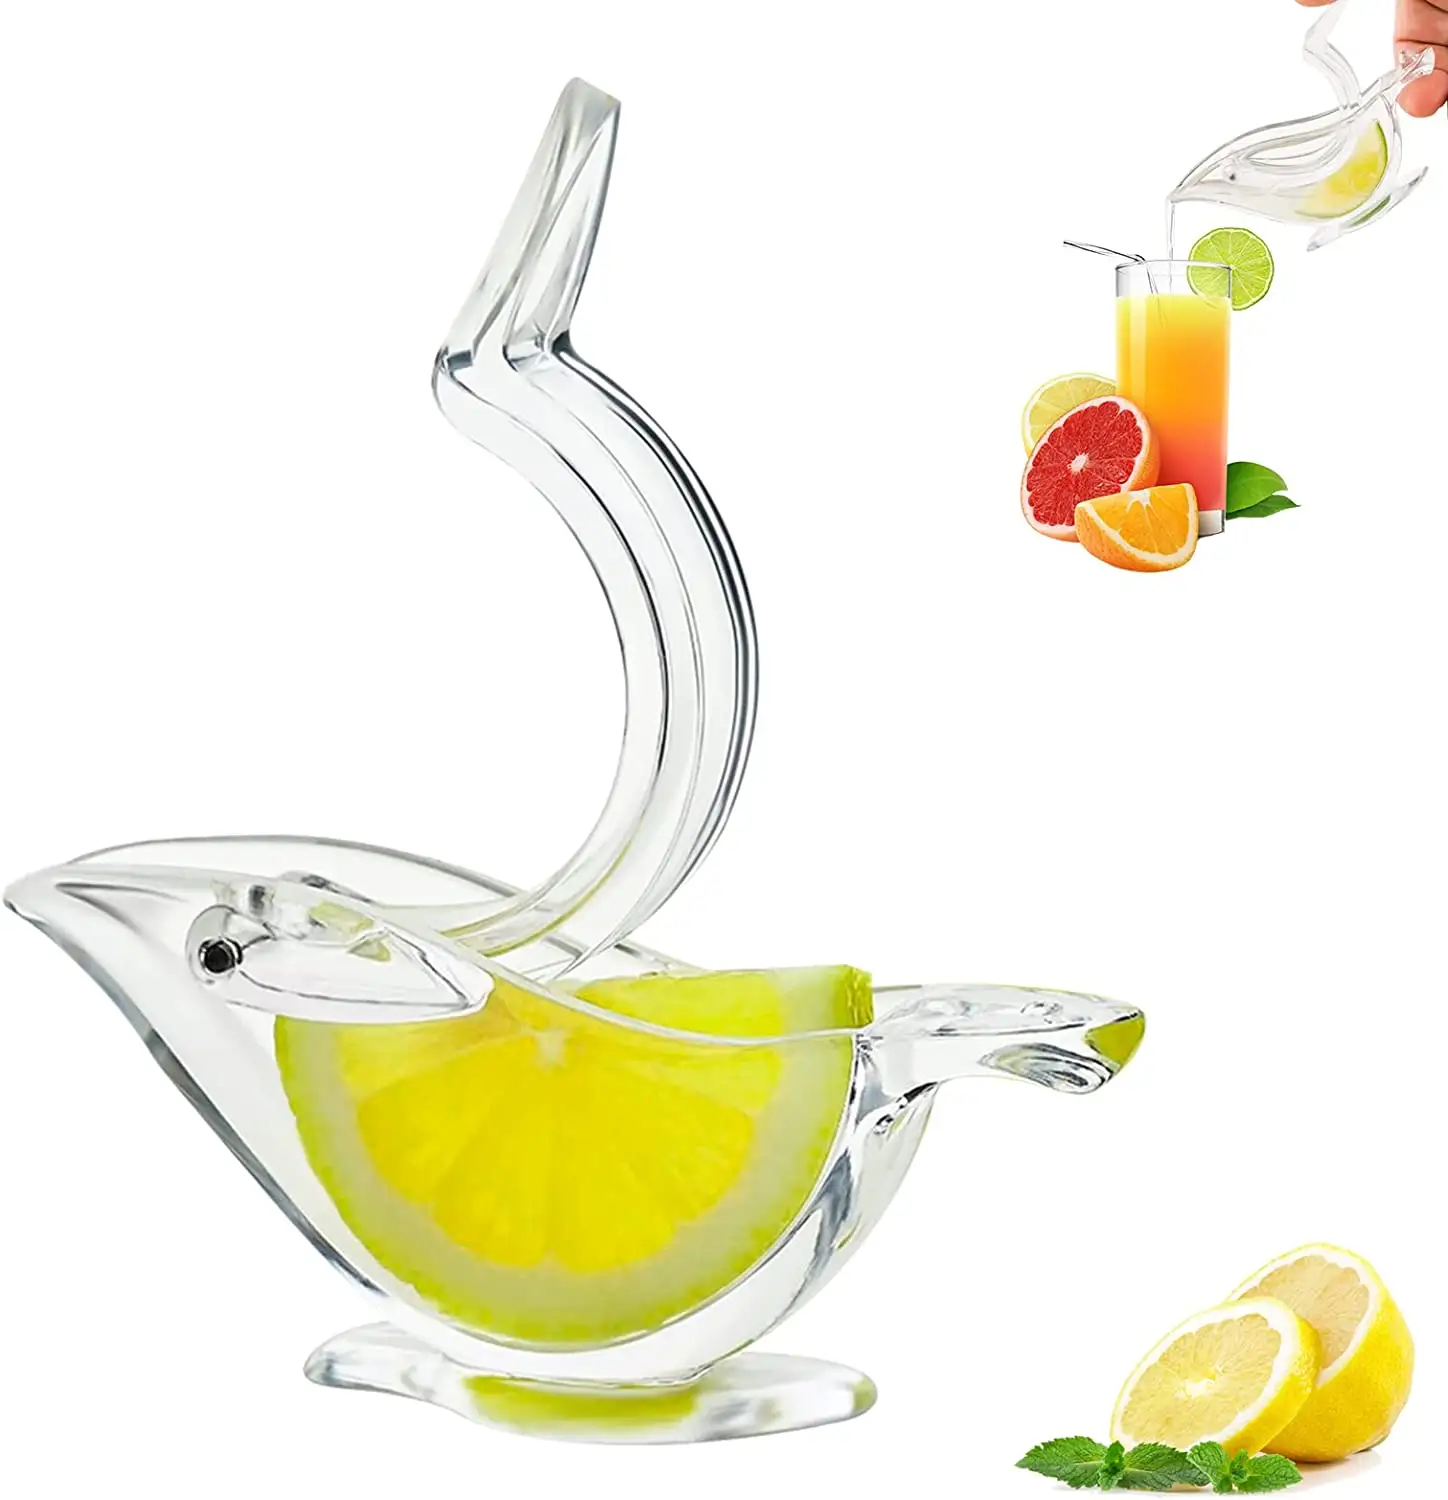 Pemeras Lemon Manual Akrilik, Juicer Buah Transparan Portabel, Juicer Tangan untuk Gadget Bar Buah Delima Lemon Jeruk Nipis